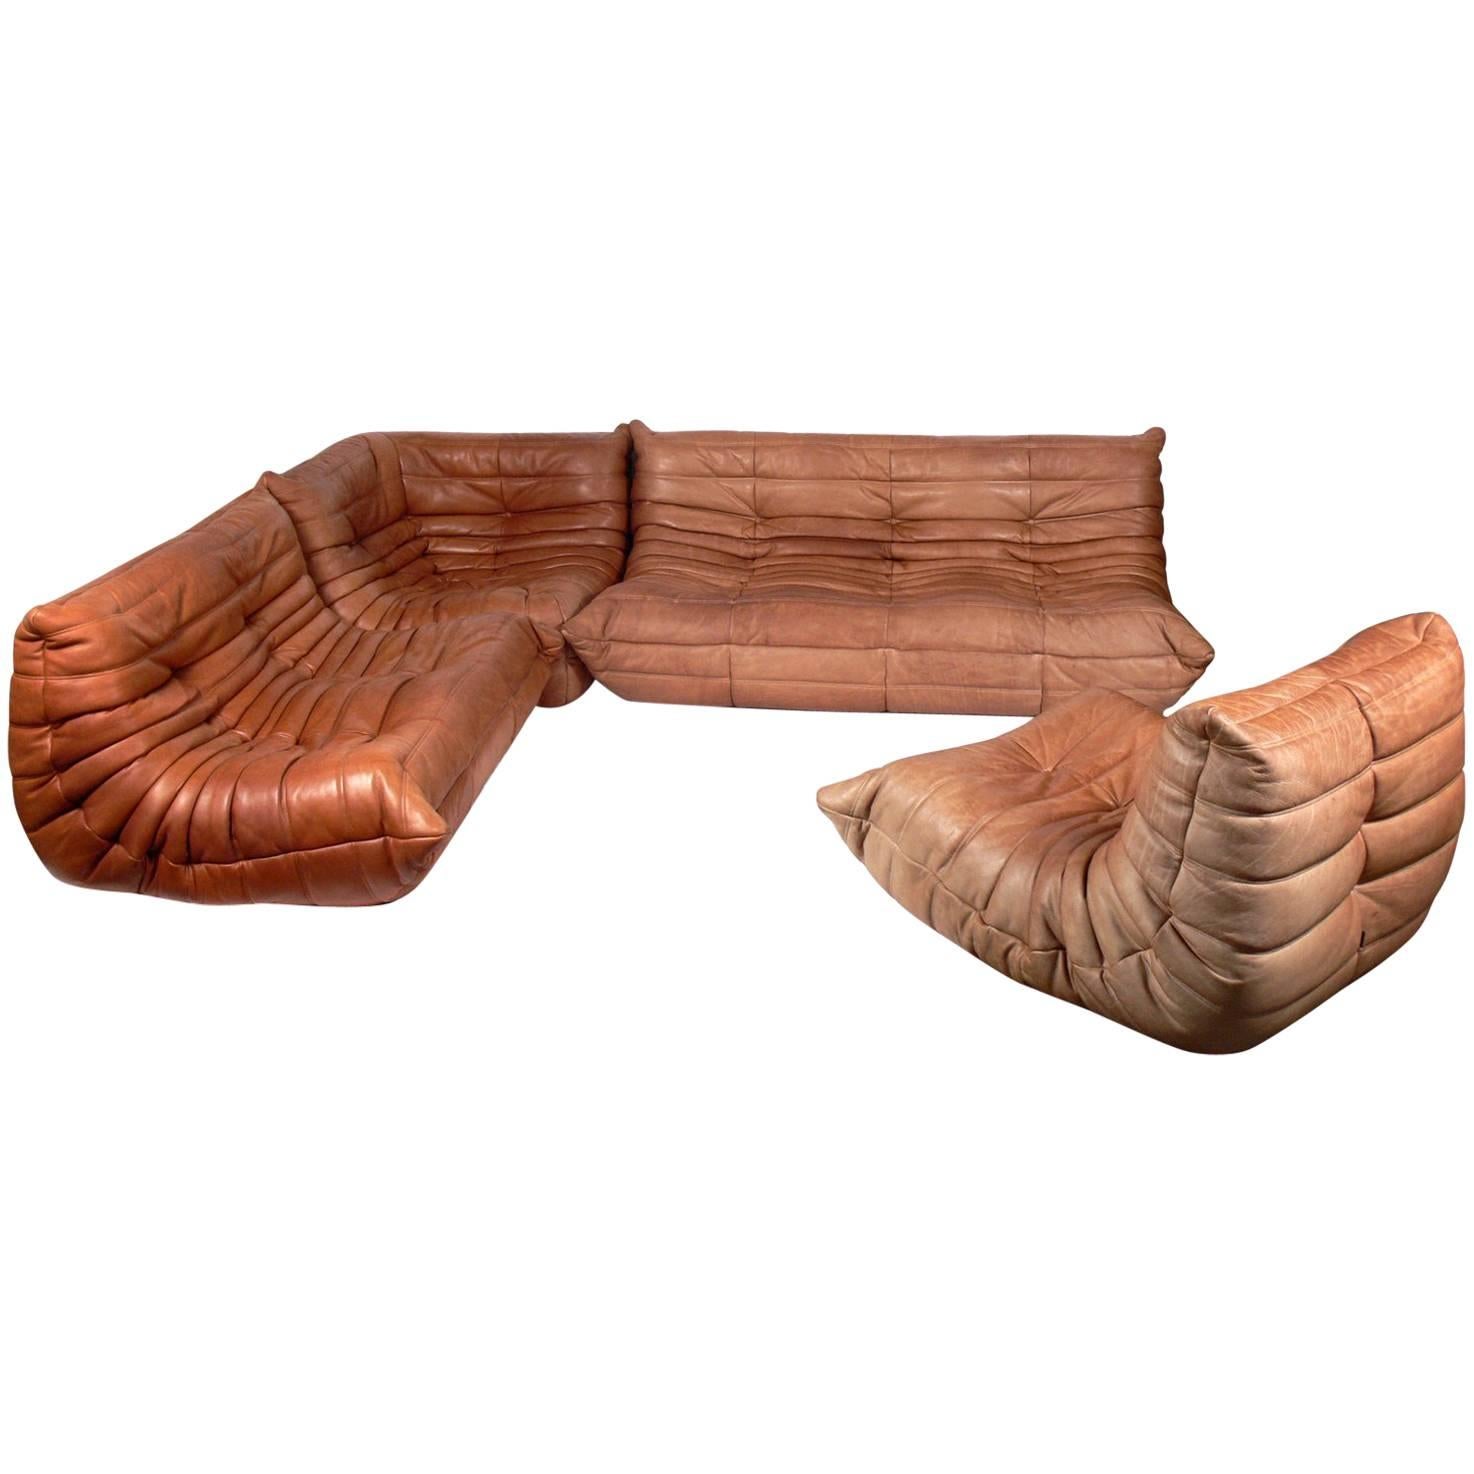 Sculptural Leather Togo Sofa by Michel Ducaroy for Ligne Roset